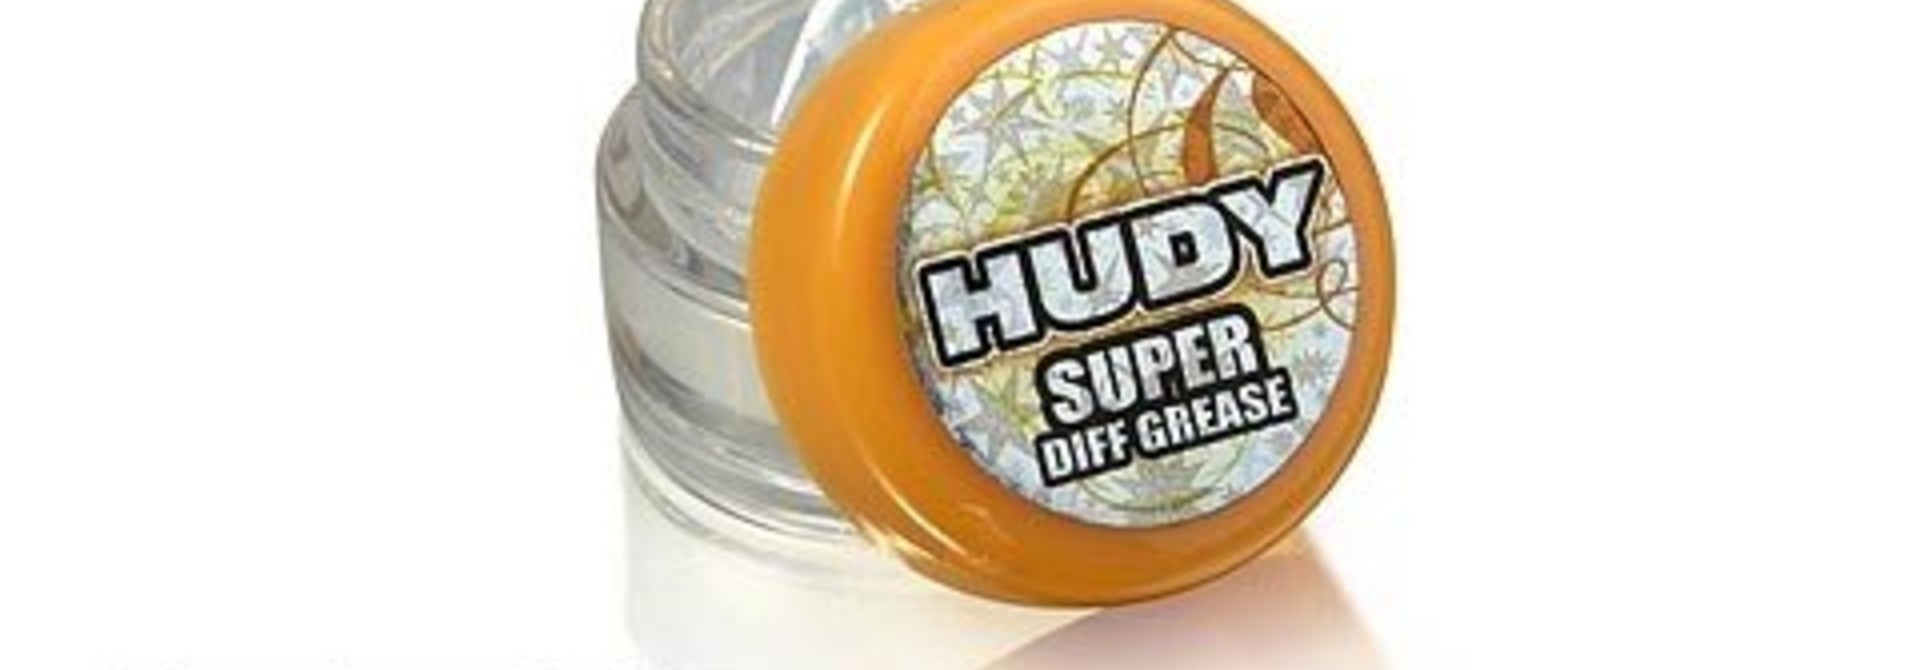 Hudy Super Diff Grease. H106212